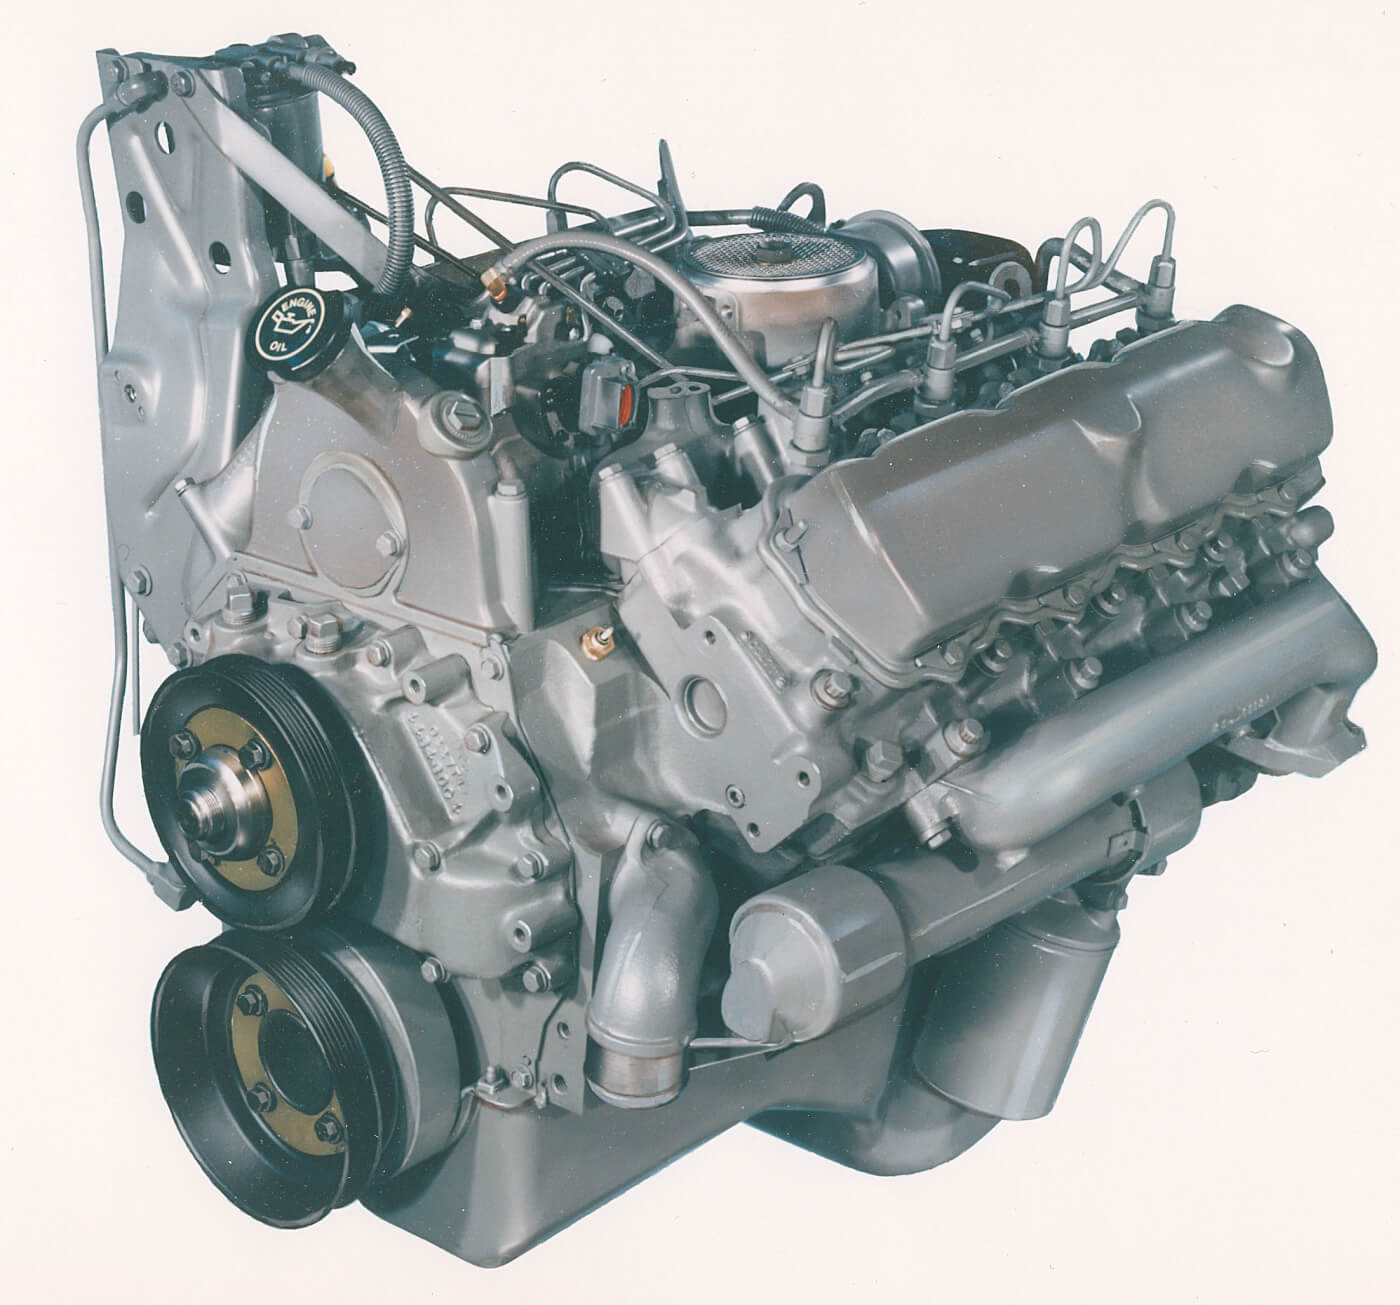 Купить дизель 1 7. Ford 7.3 Diesel. Двигатель Форд 7.3 дизель. 7 3 Diesel engine Powerstroke Ford. Ford engine 6.9 Diesel.